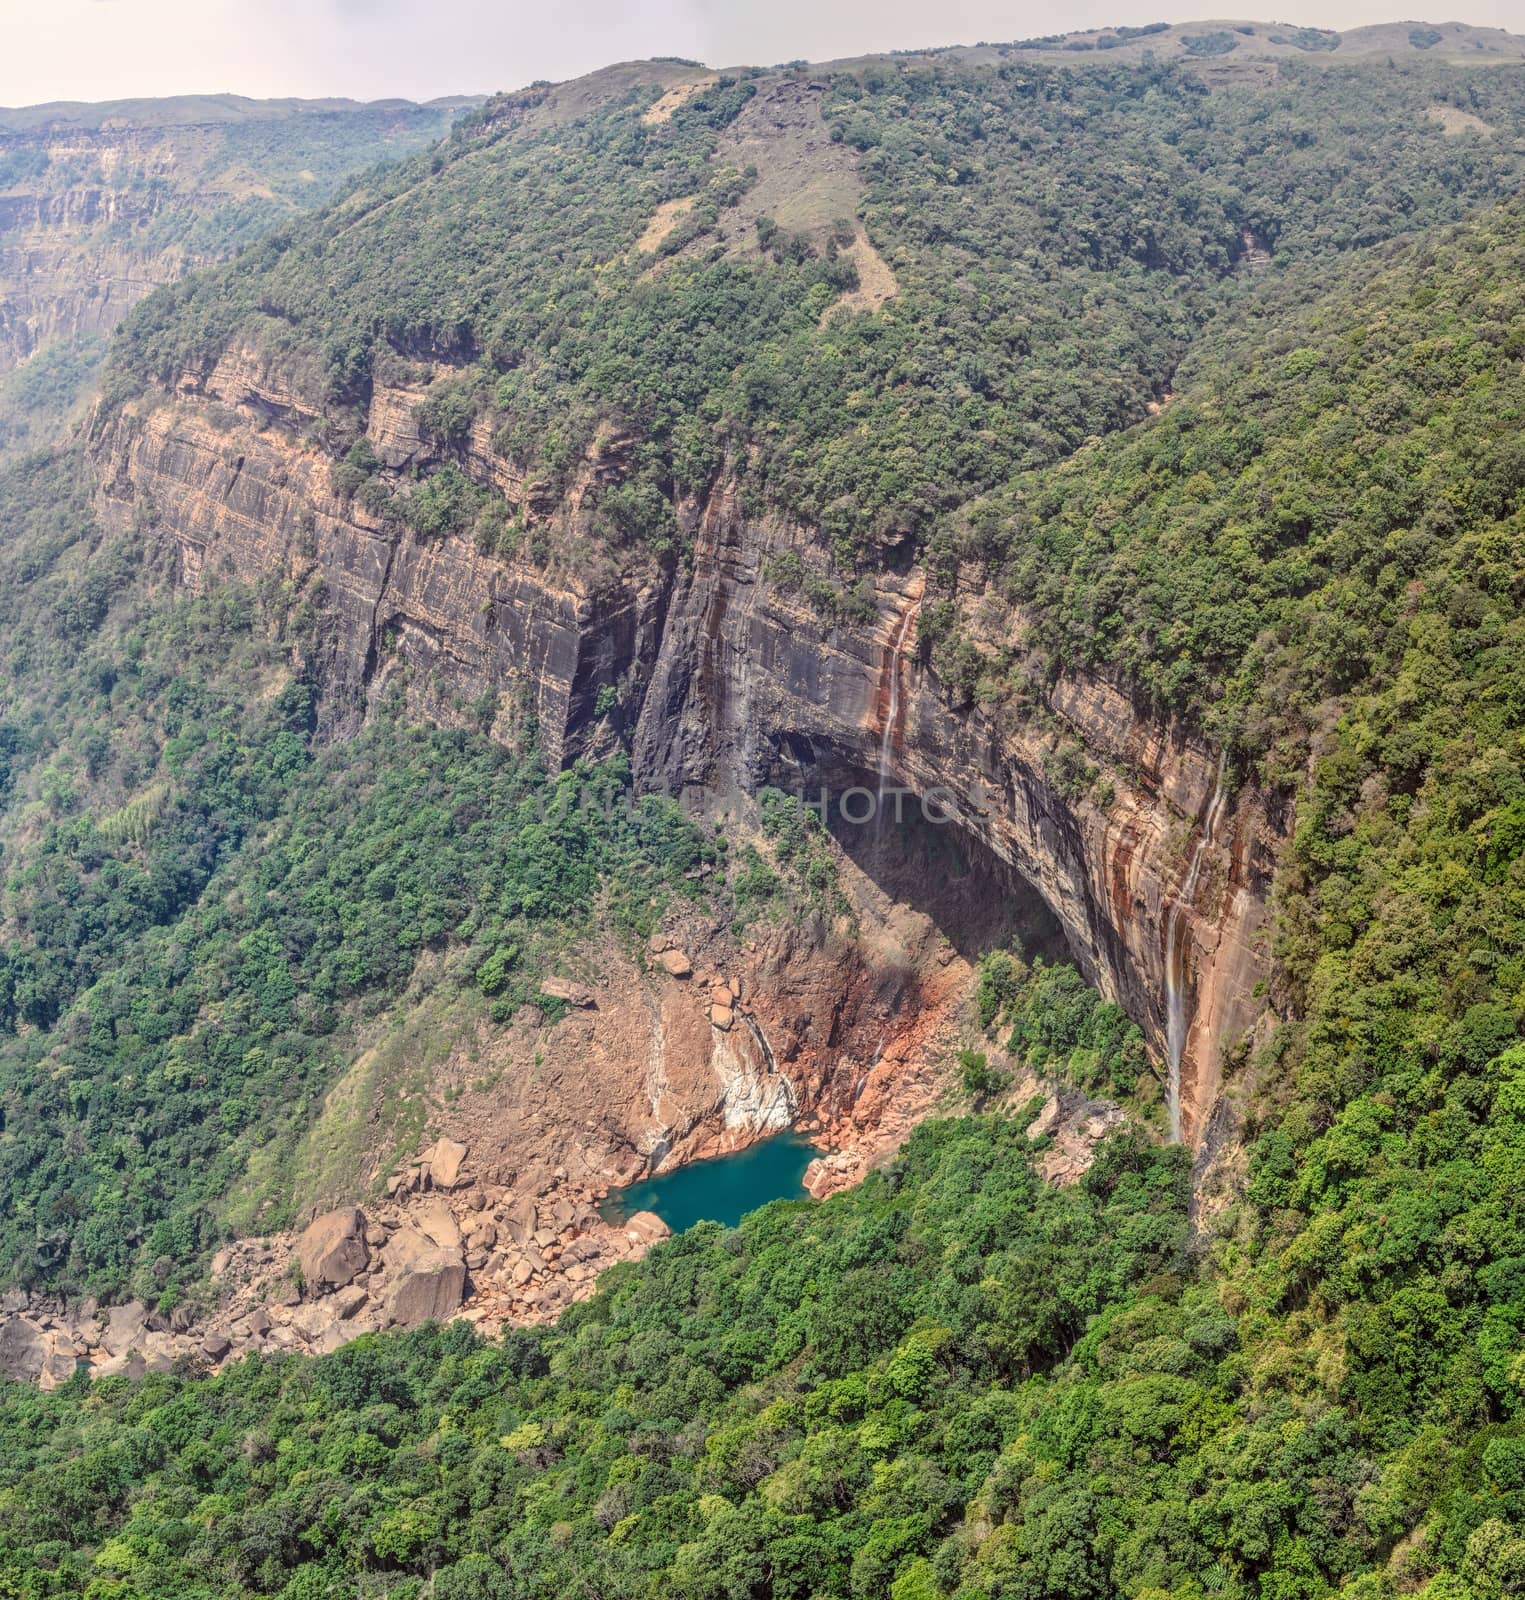 Beautiful Nohkalikai waterfalls in Cherrapunji, India